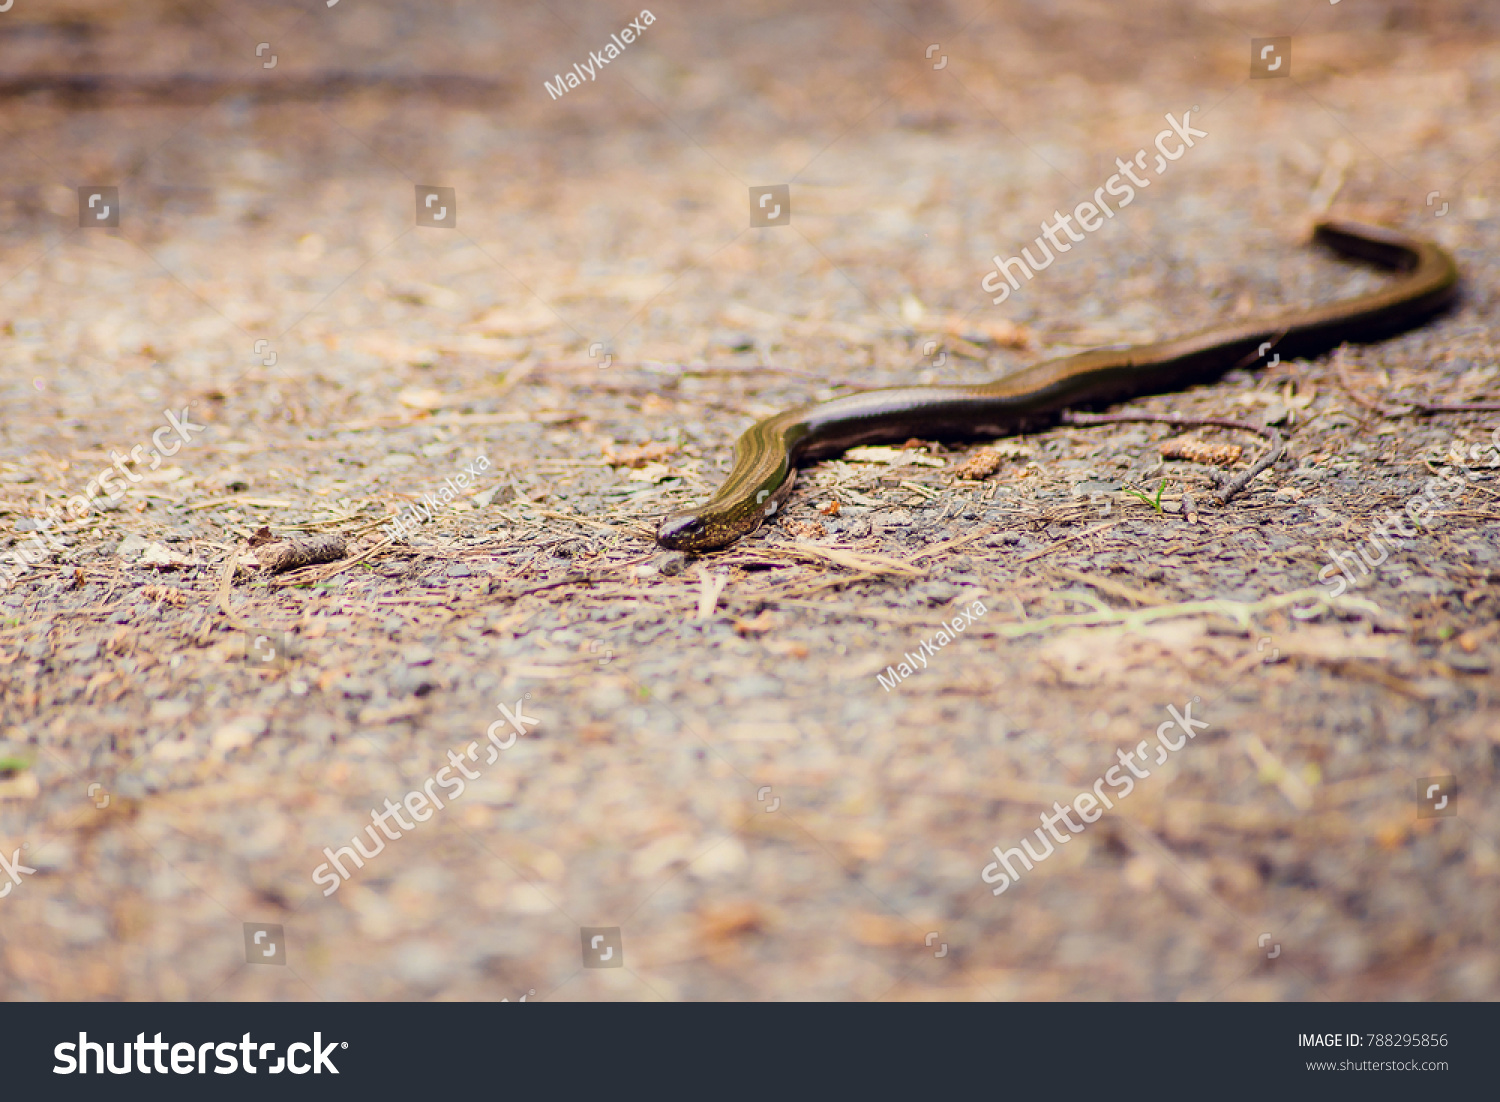 The radiated ratsnake, copperhead rat snake, or copper-headed trinket snake (Coelognathus radiata) is a nonvenomous species of colubrid snake. #788295856